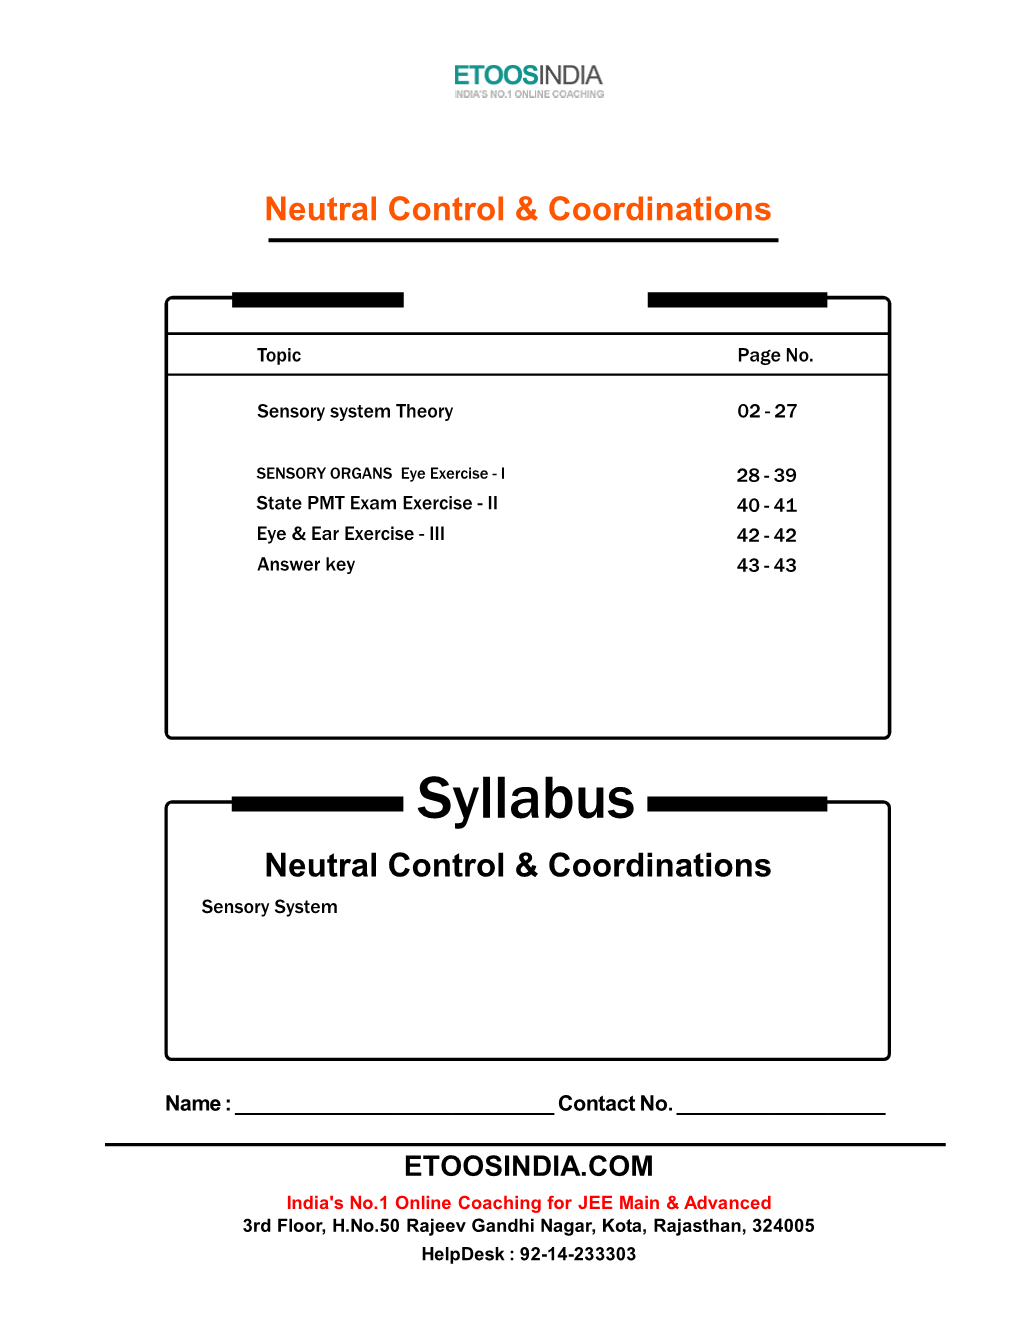 Syllabus Neutral Control & Coordinations Sensory System